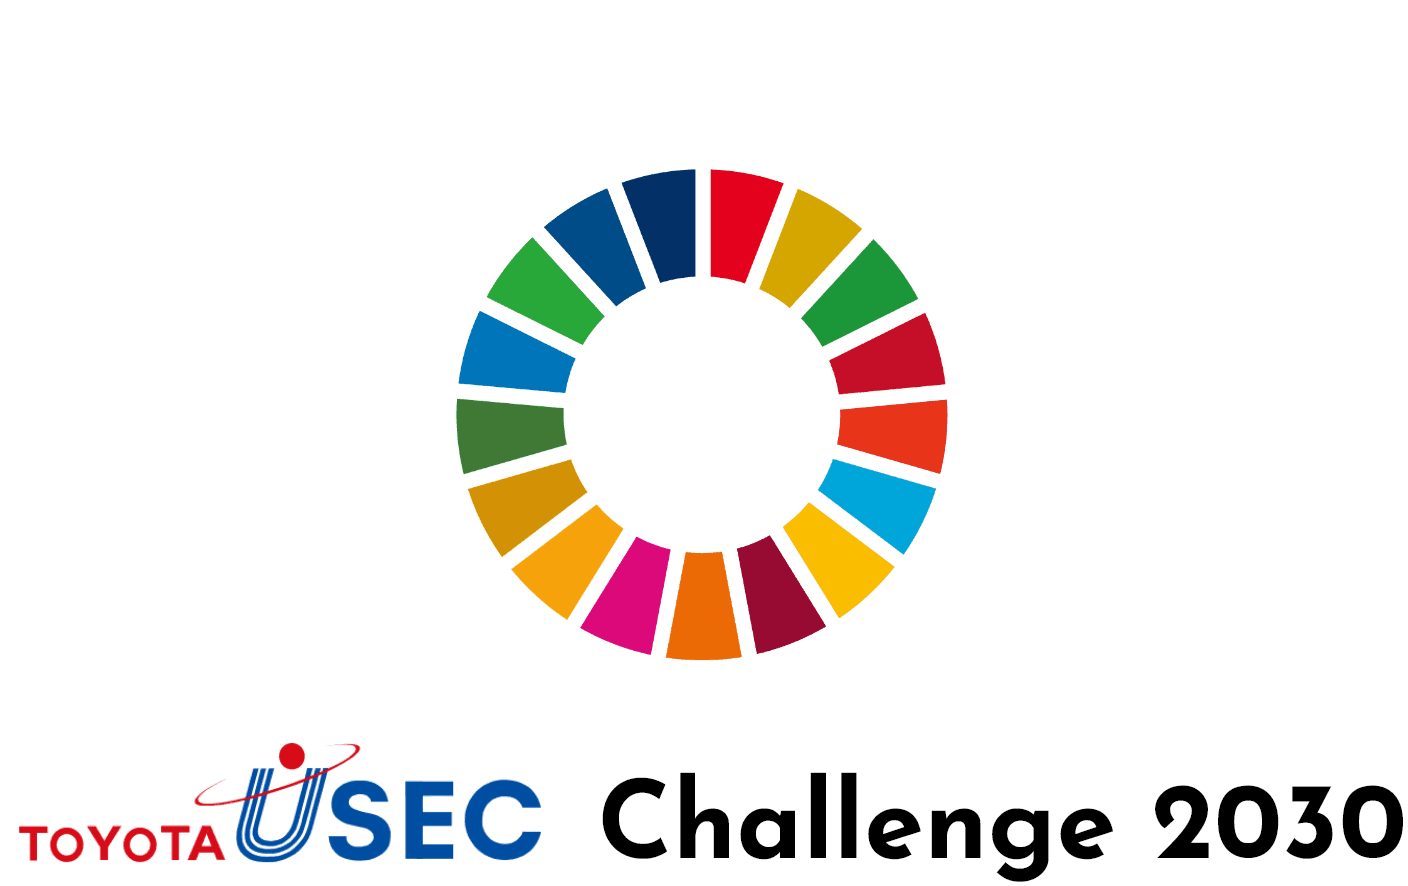 TOYOTA USEC Challenge 2030